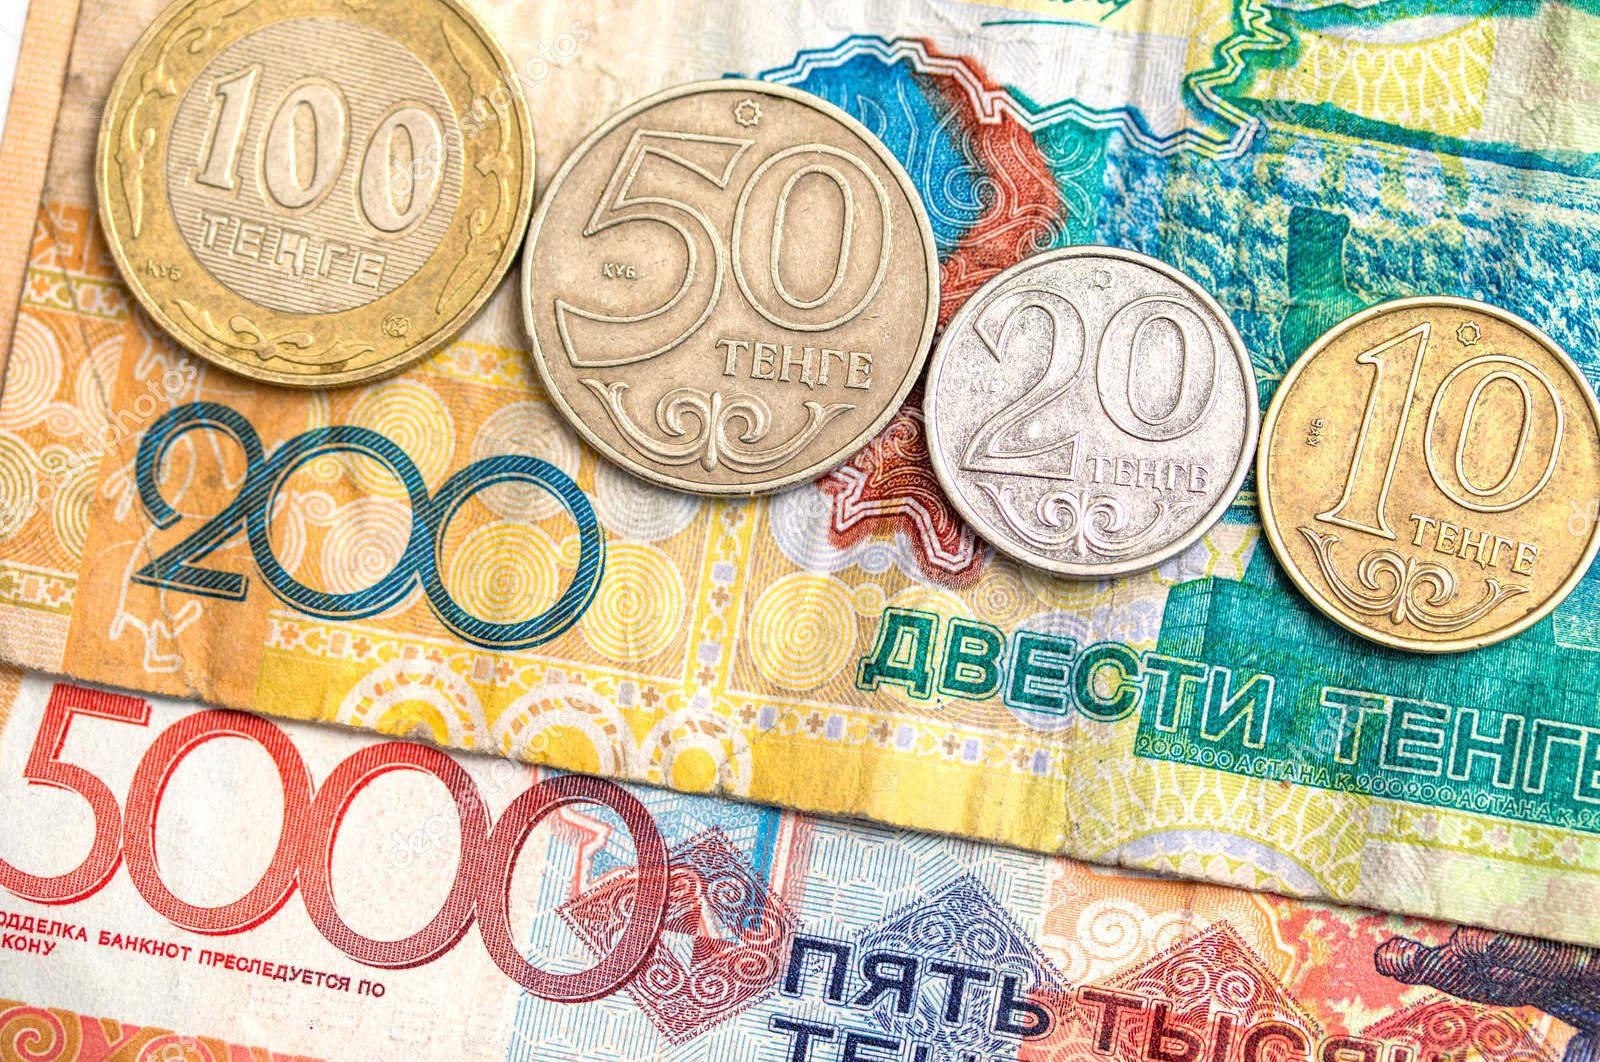 Банкнота Казахстана 200 тенге